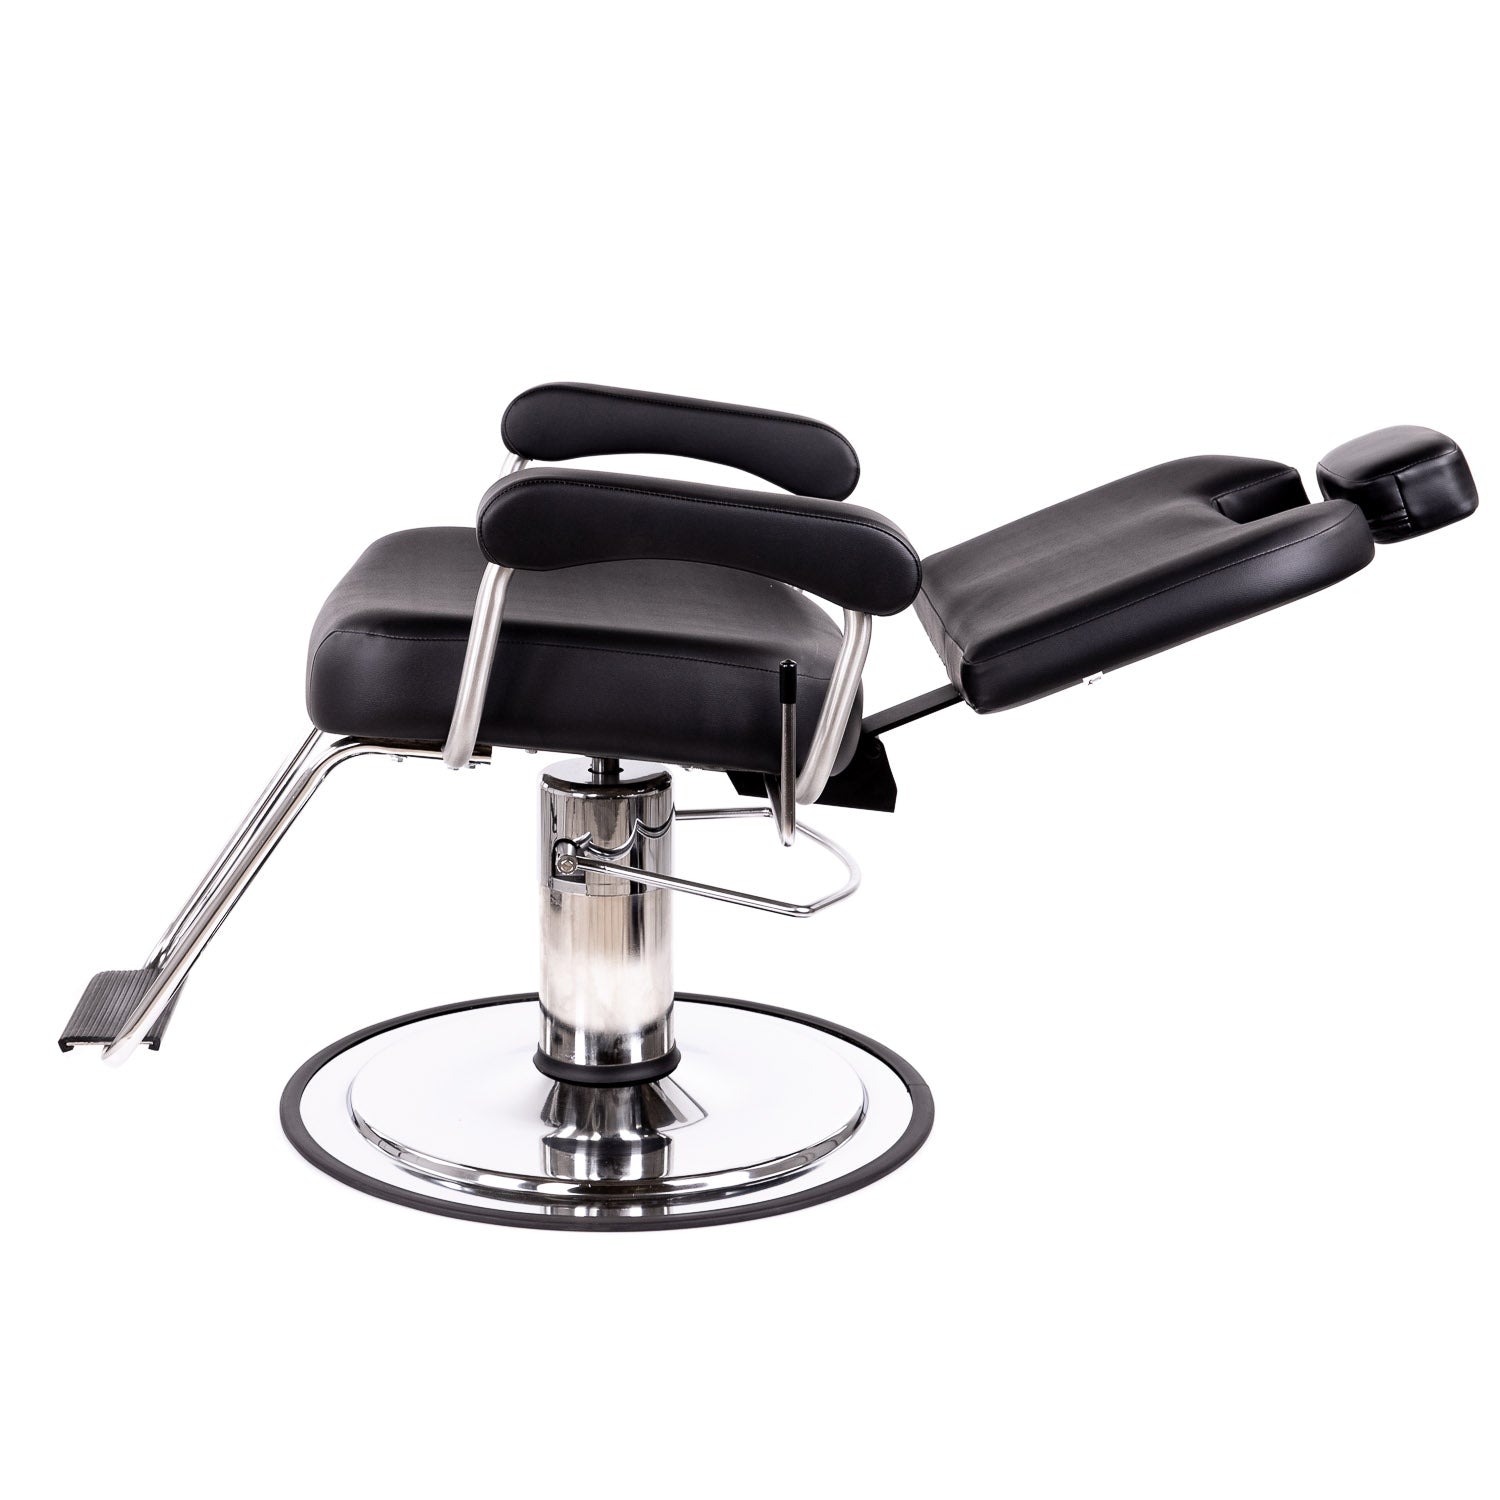 Samson Barber Chair - Collins - Salon Equipment and Barber Equipment